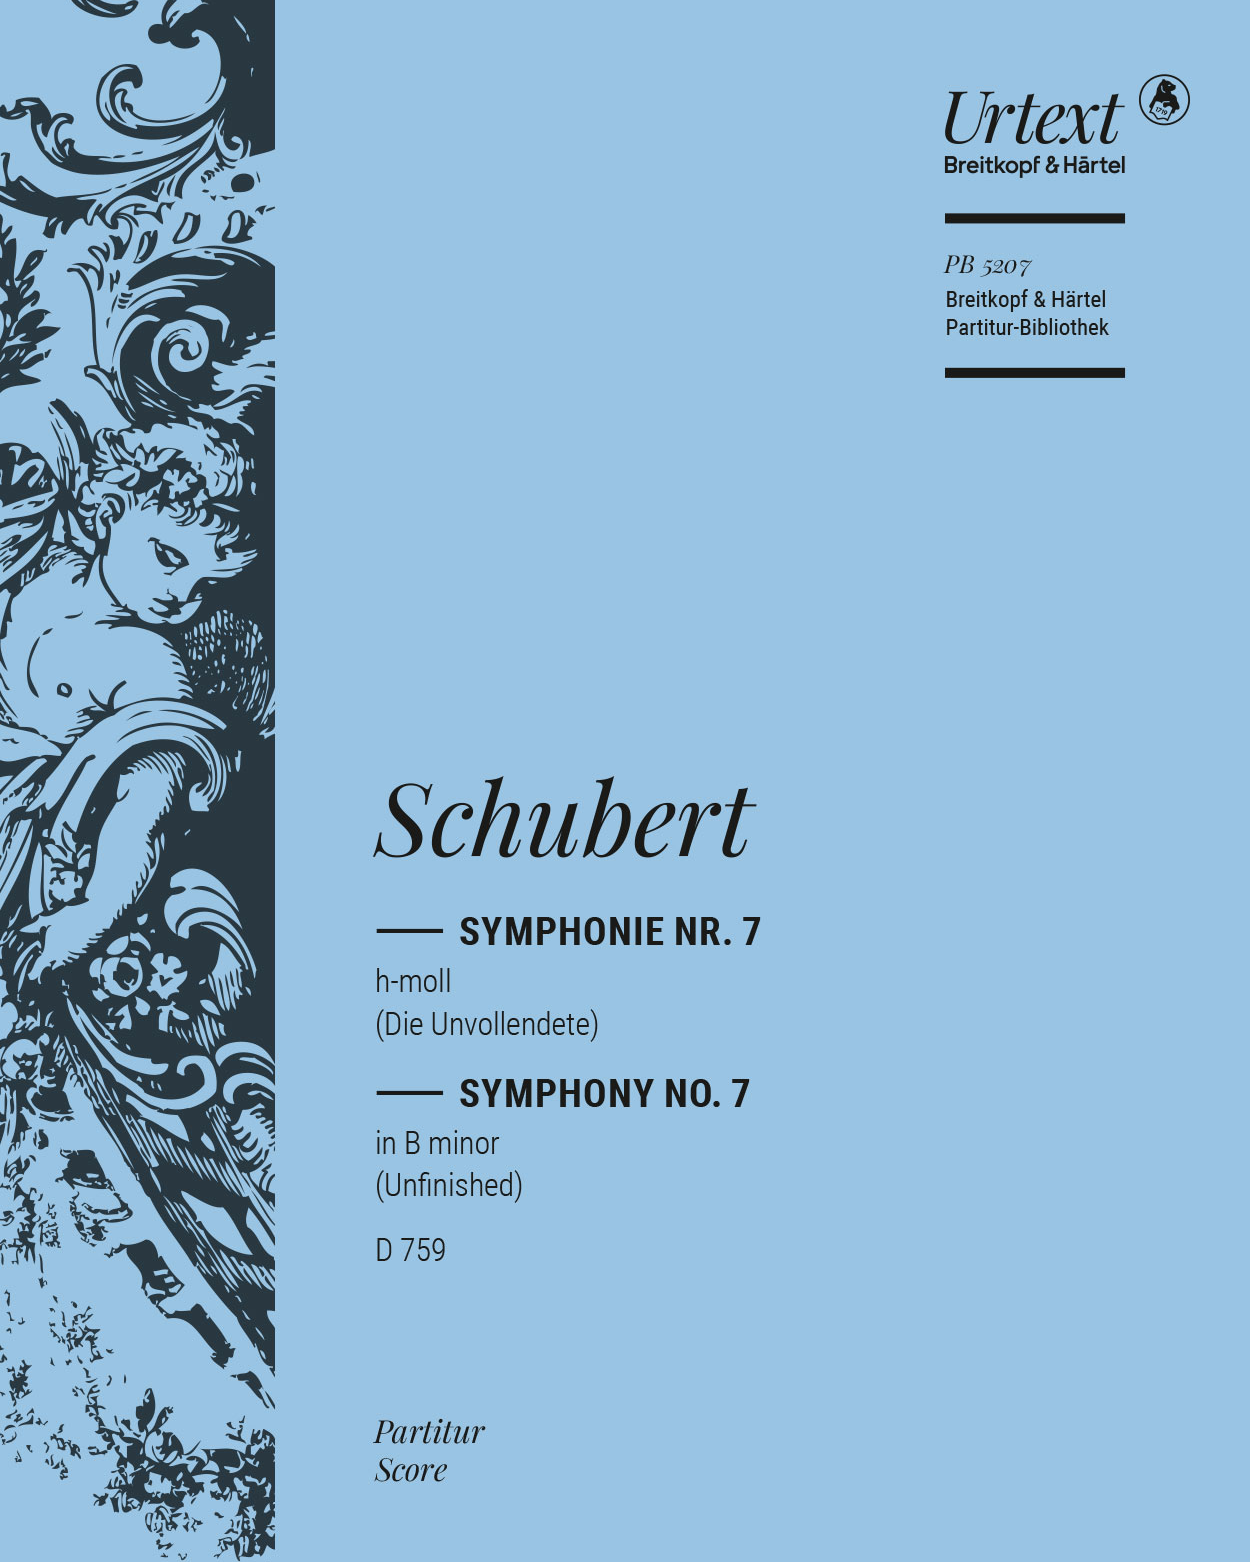 Symphonie Nr. 7 h-moll D 759